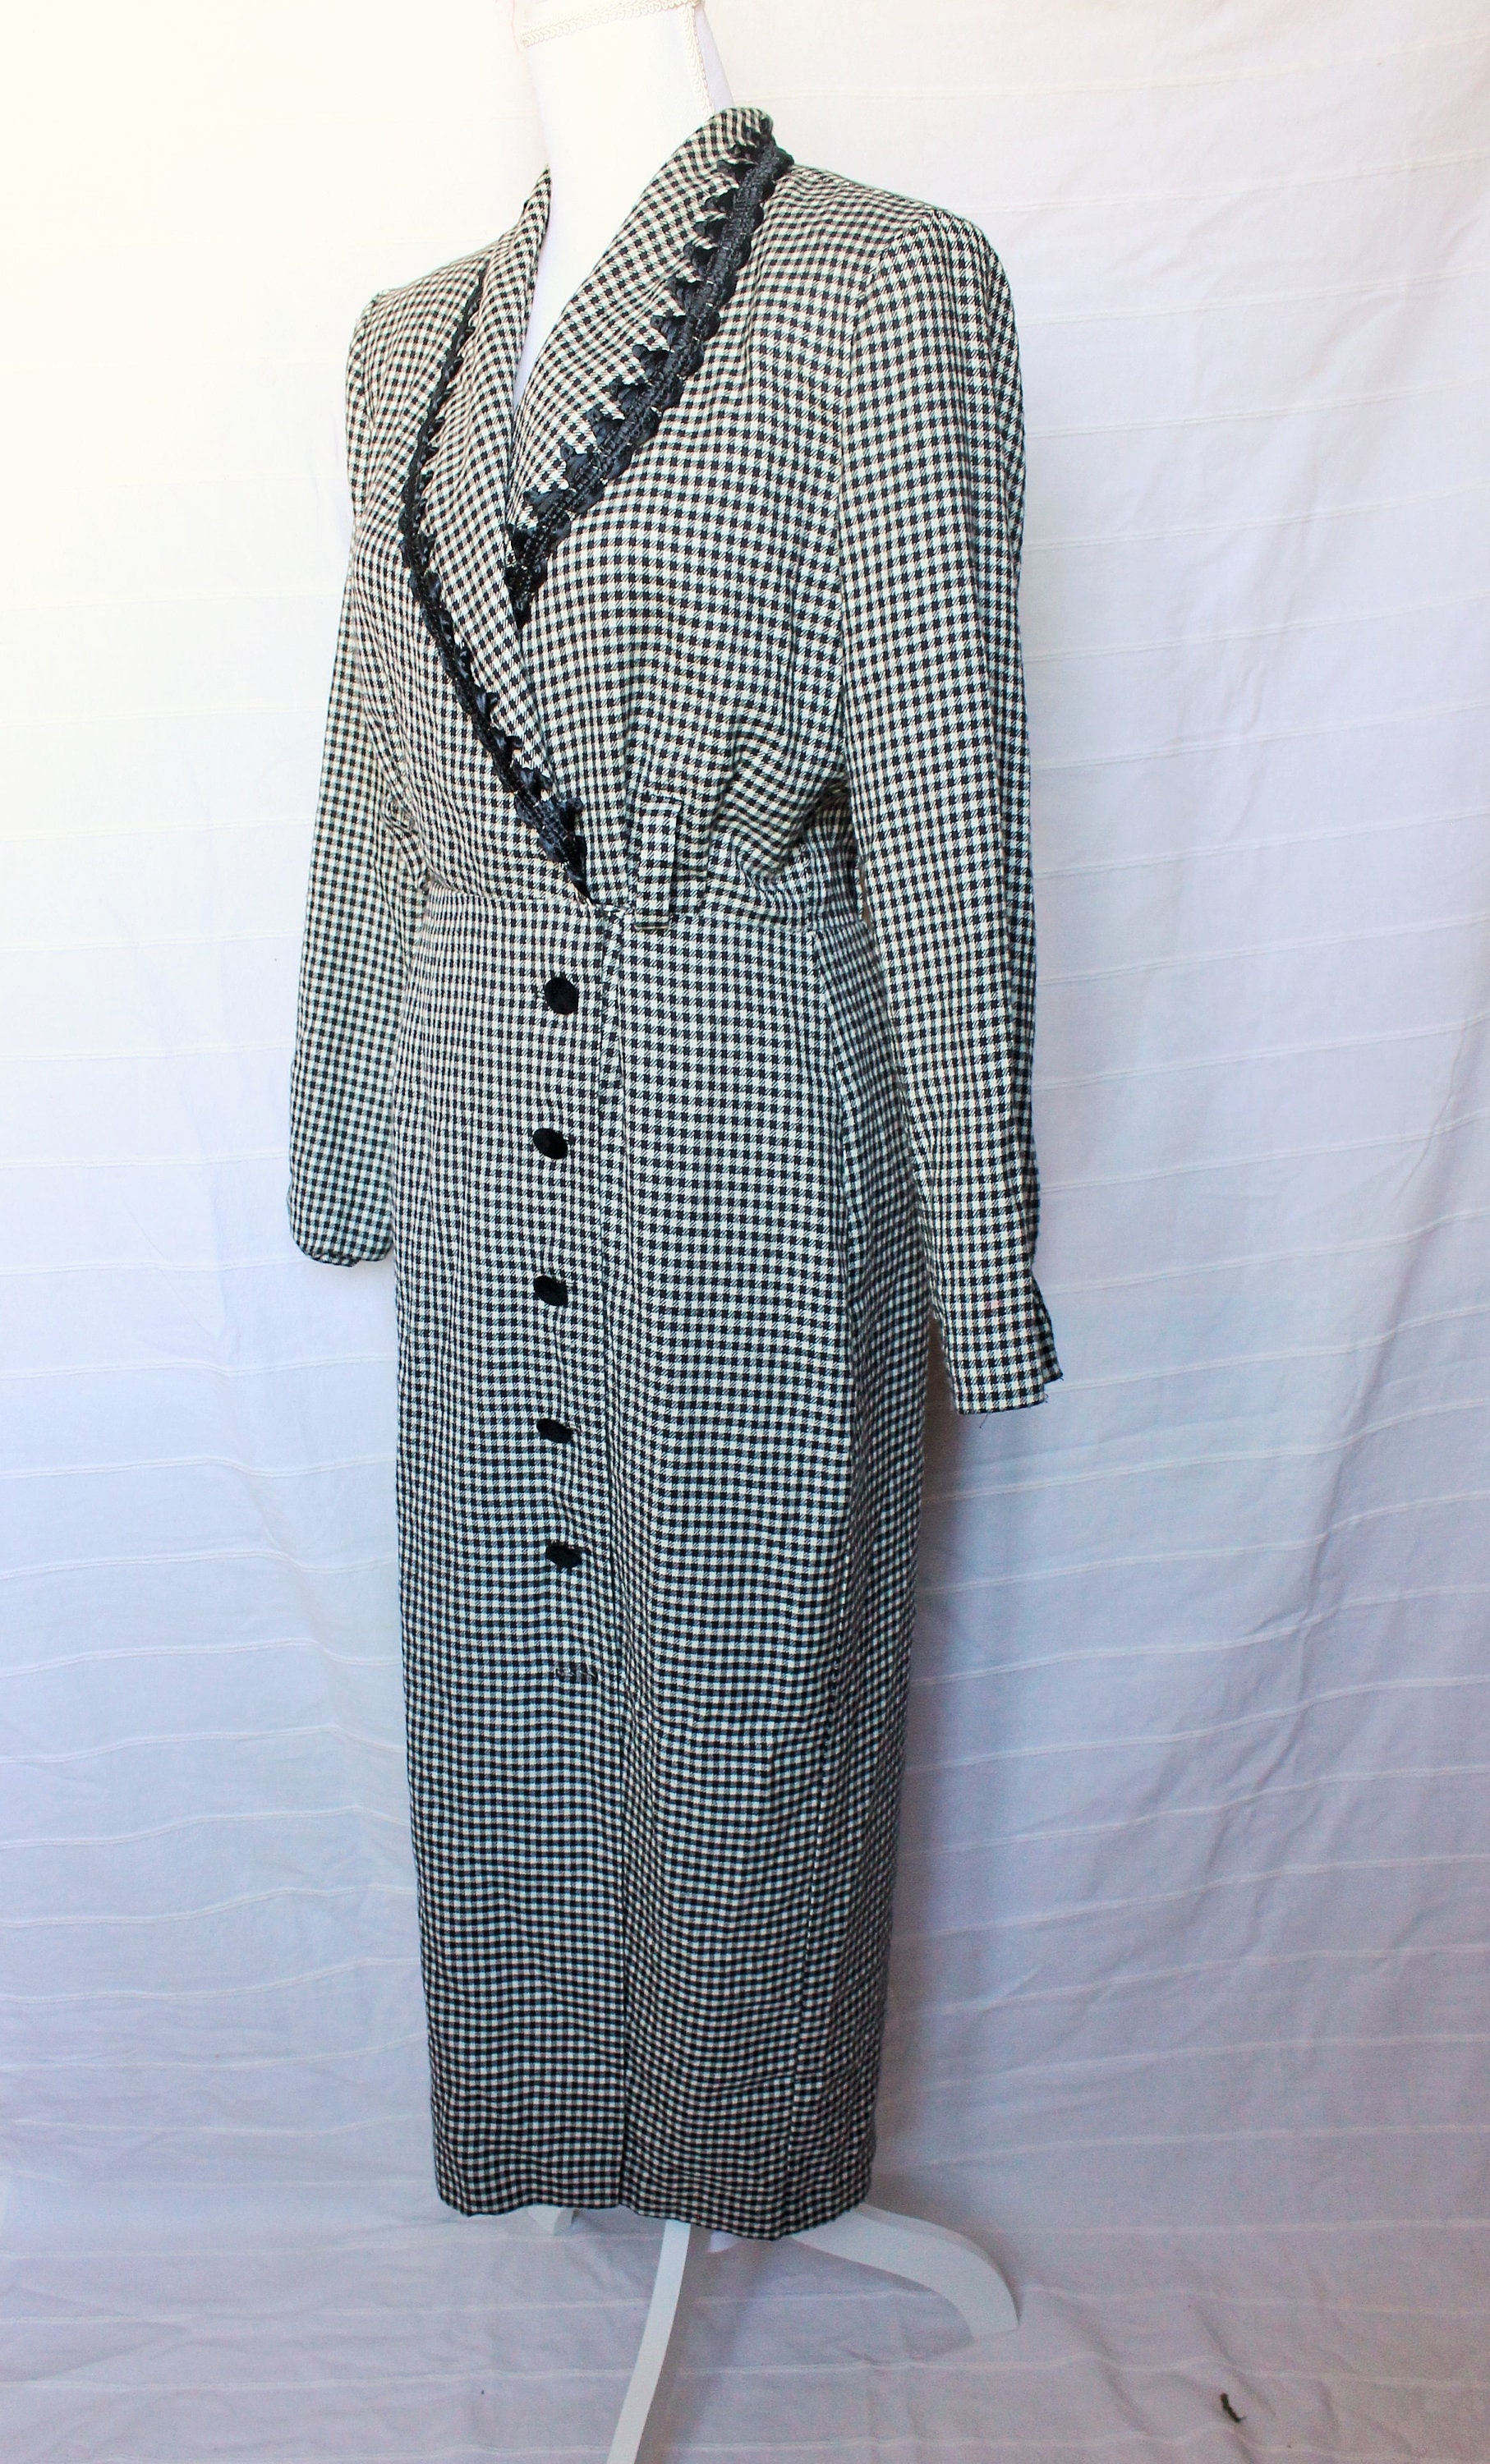 Retro 80s coat dress black and white plaid wrap dress | Etsy